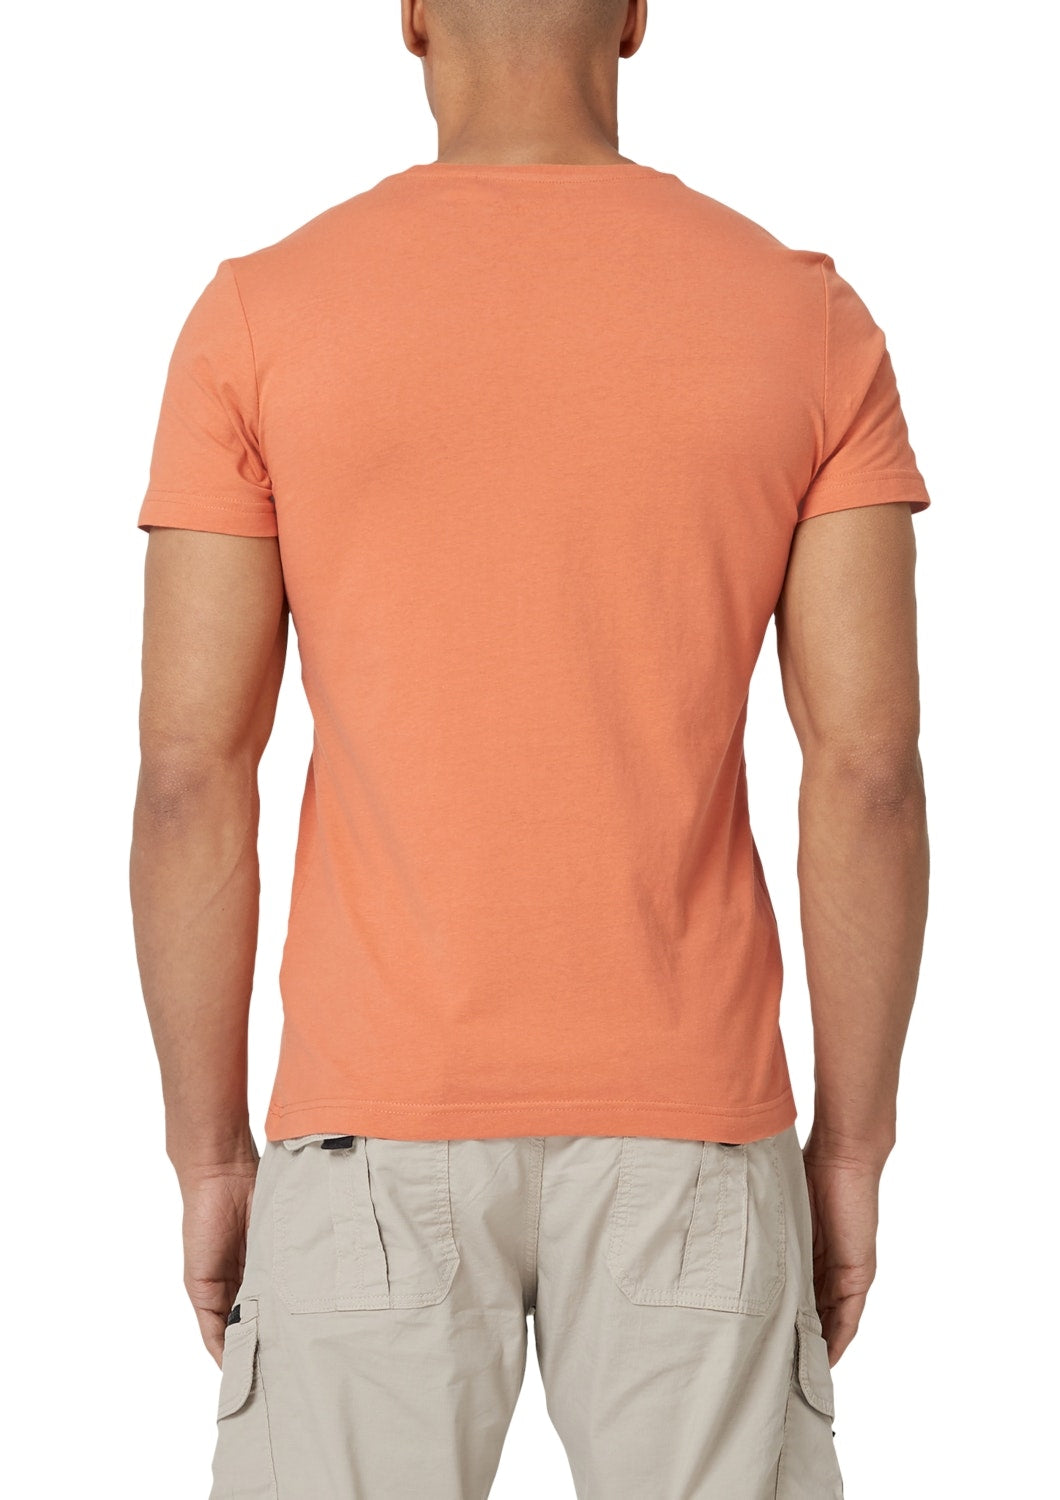 T-shirt short sleeves